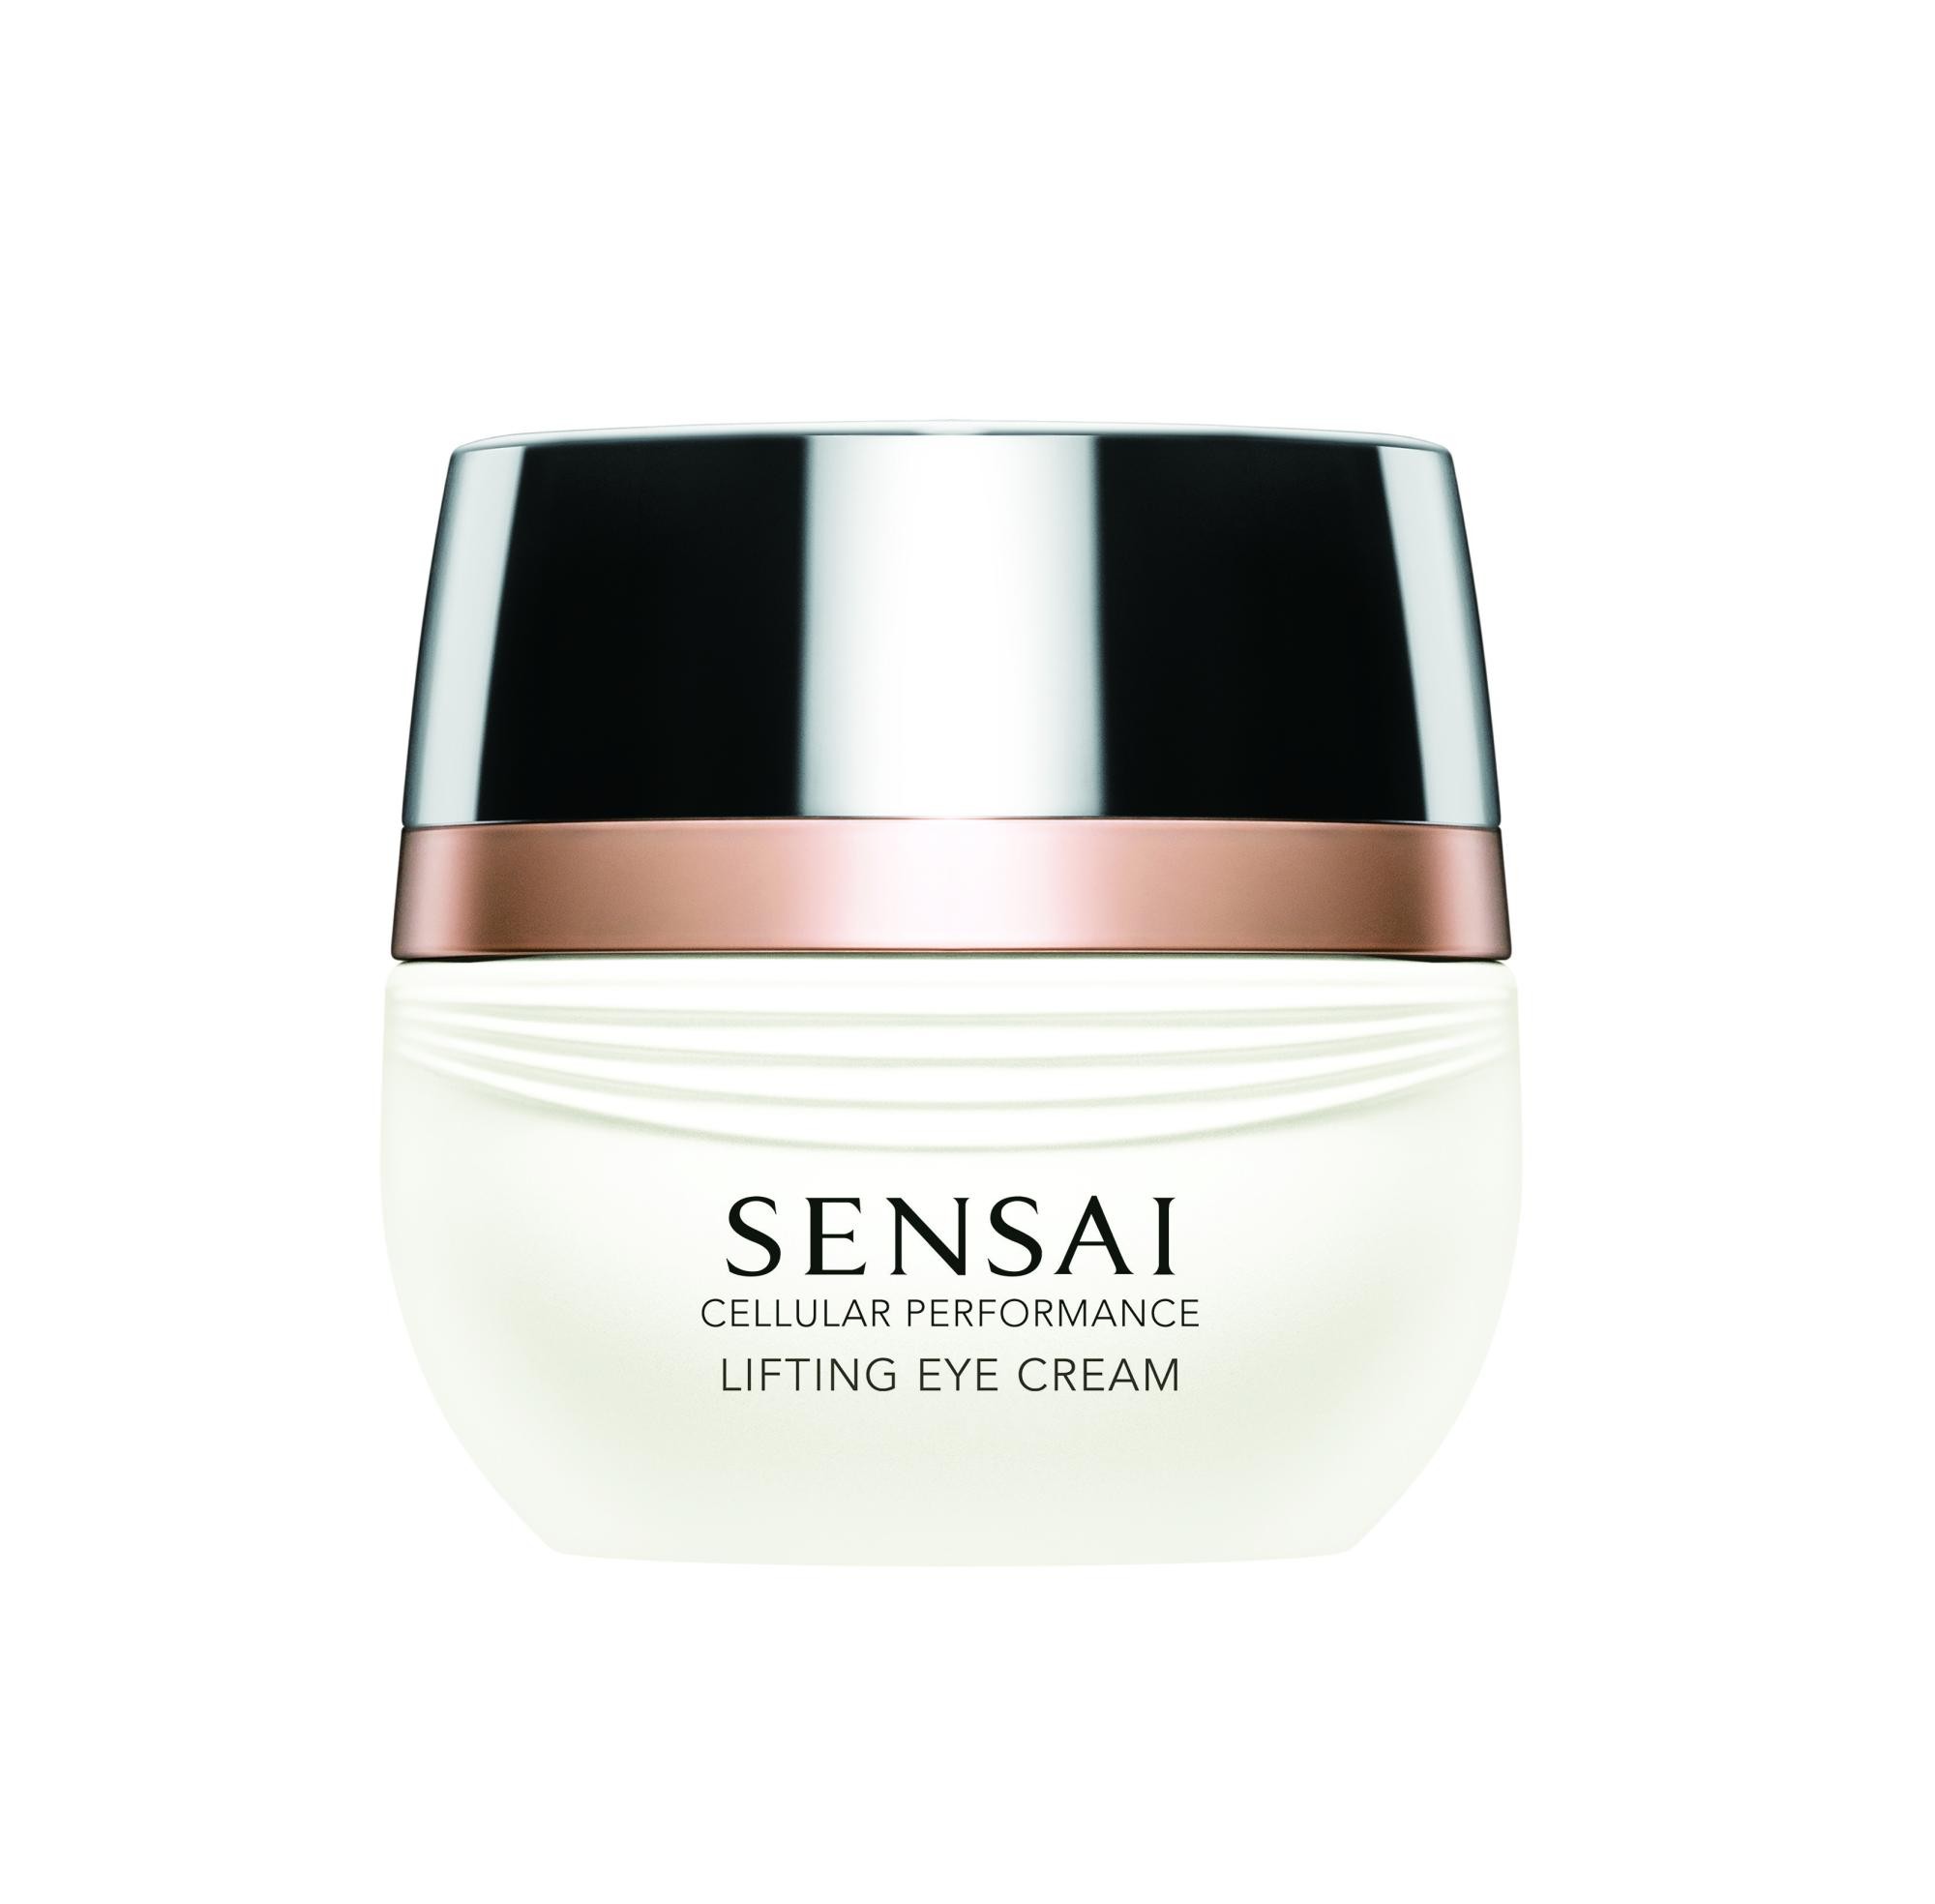 Sensai Cellular Performance Lifting Eye Cream 15ml